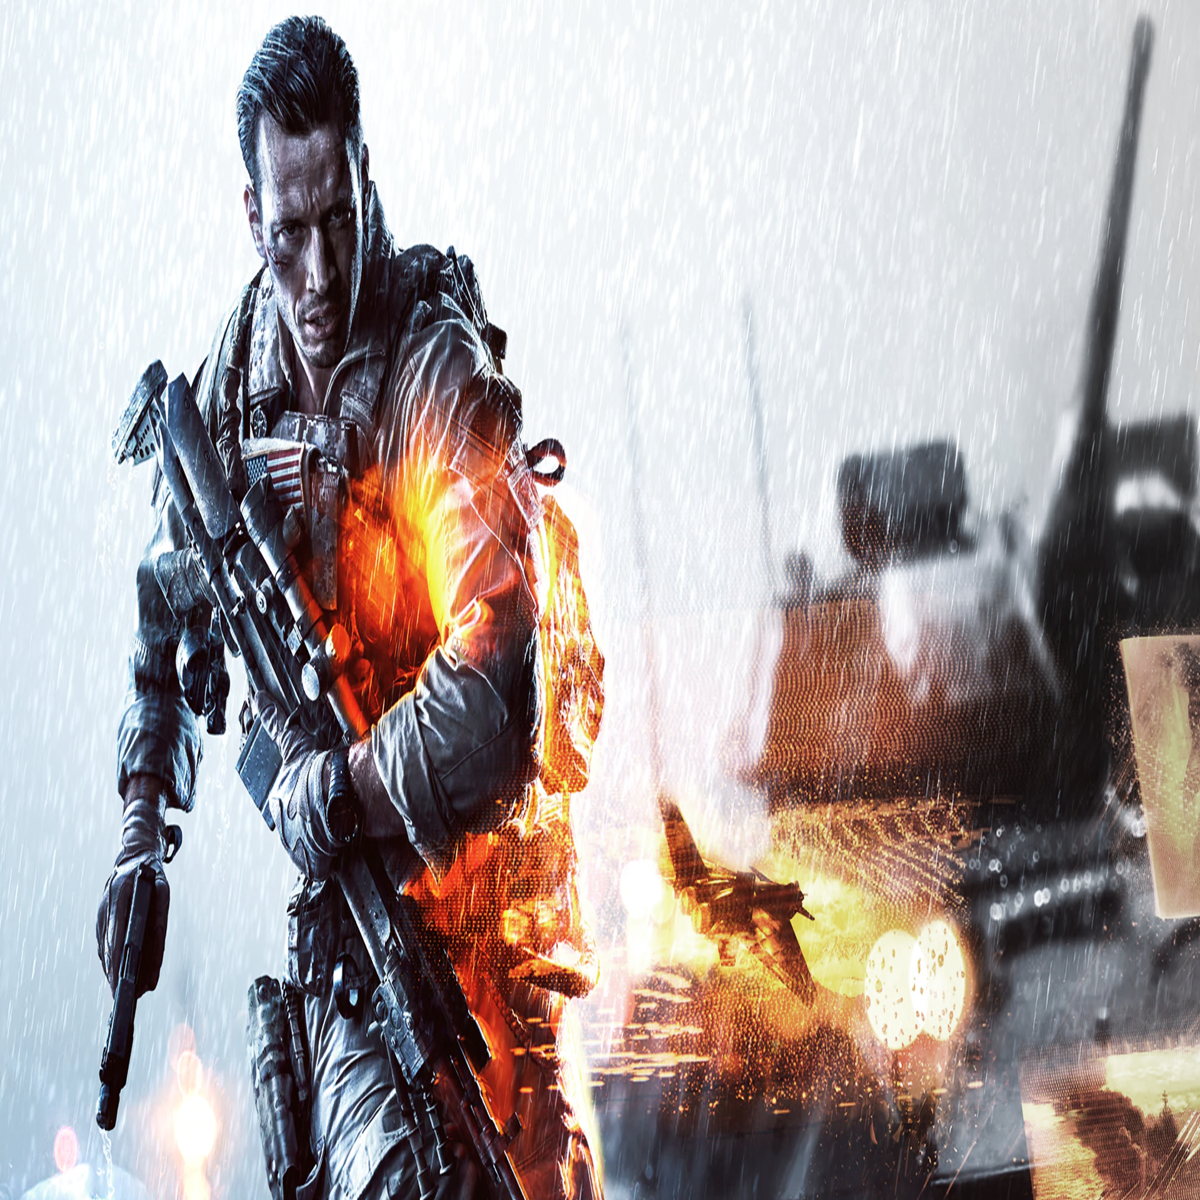 Battlefield 4 Premium (Game keys) for free!